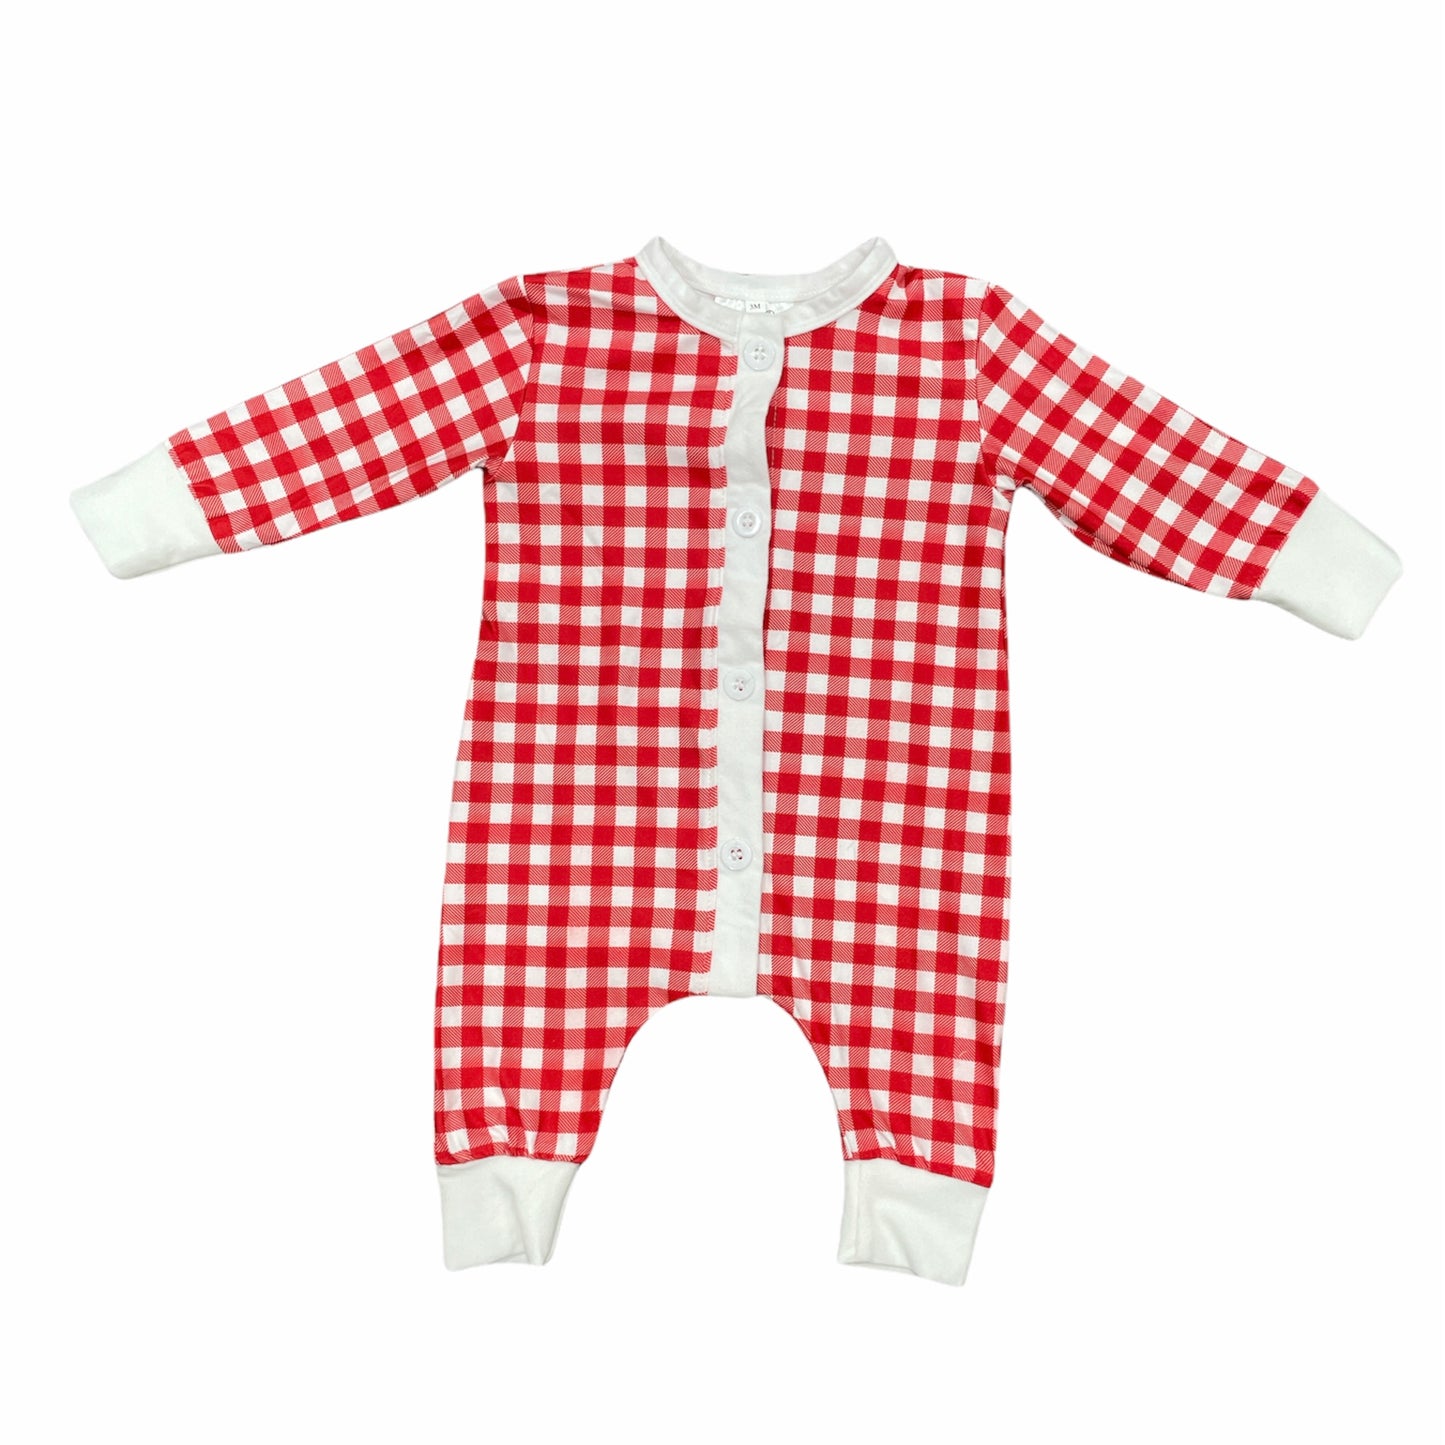 Buttflap Pajamas - Red Gingham